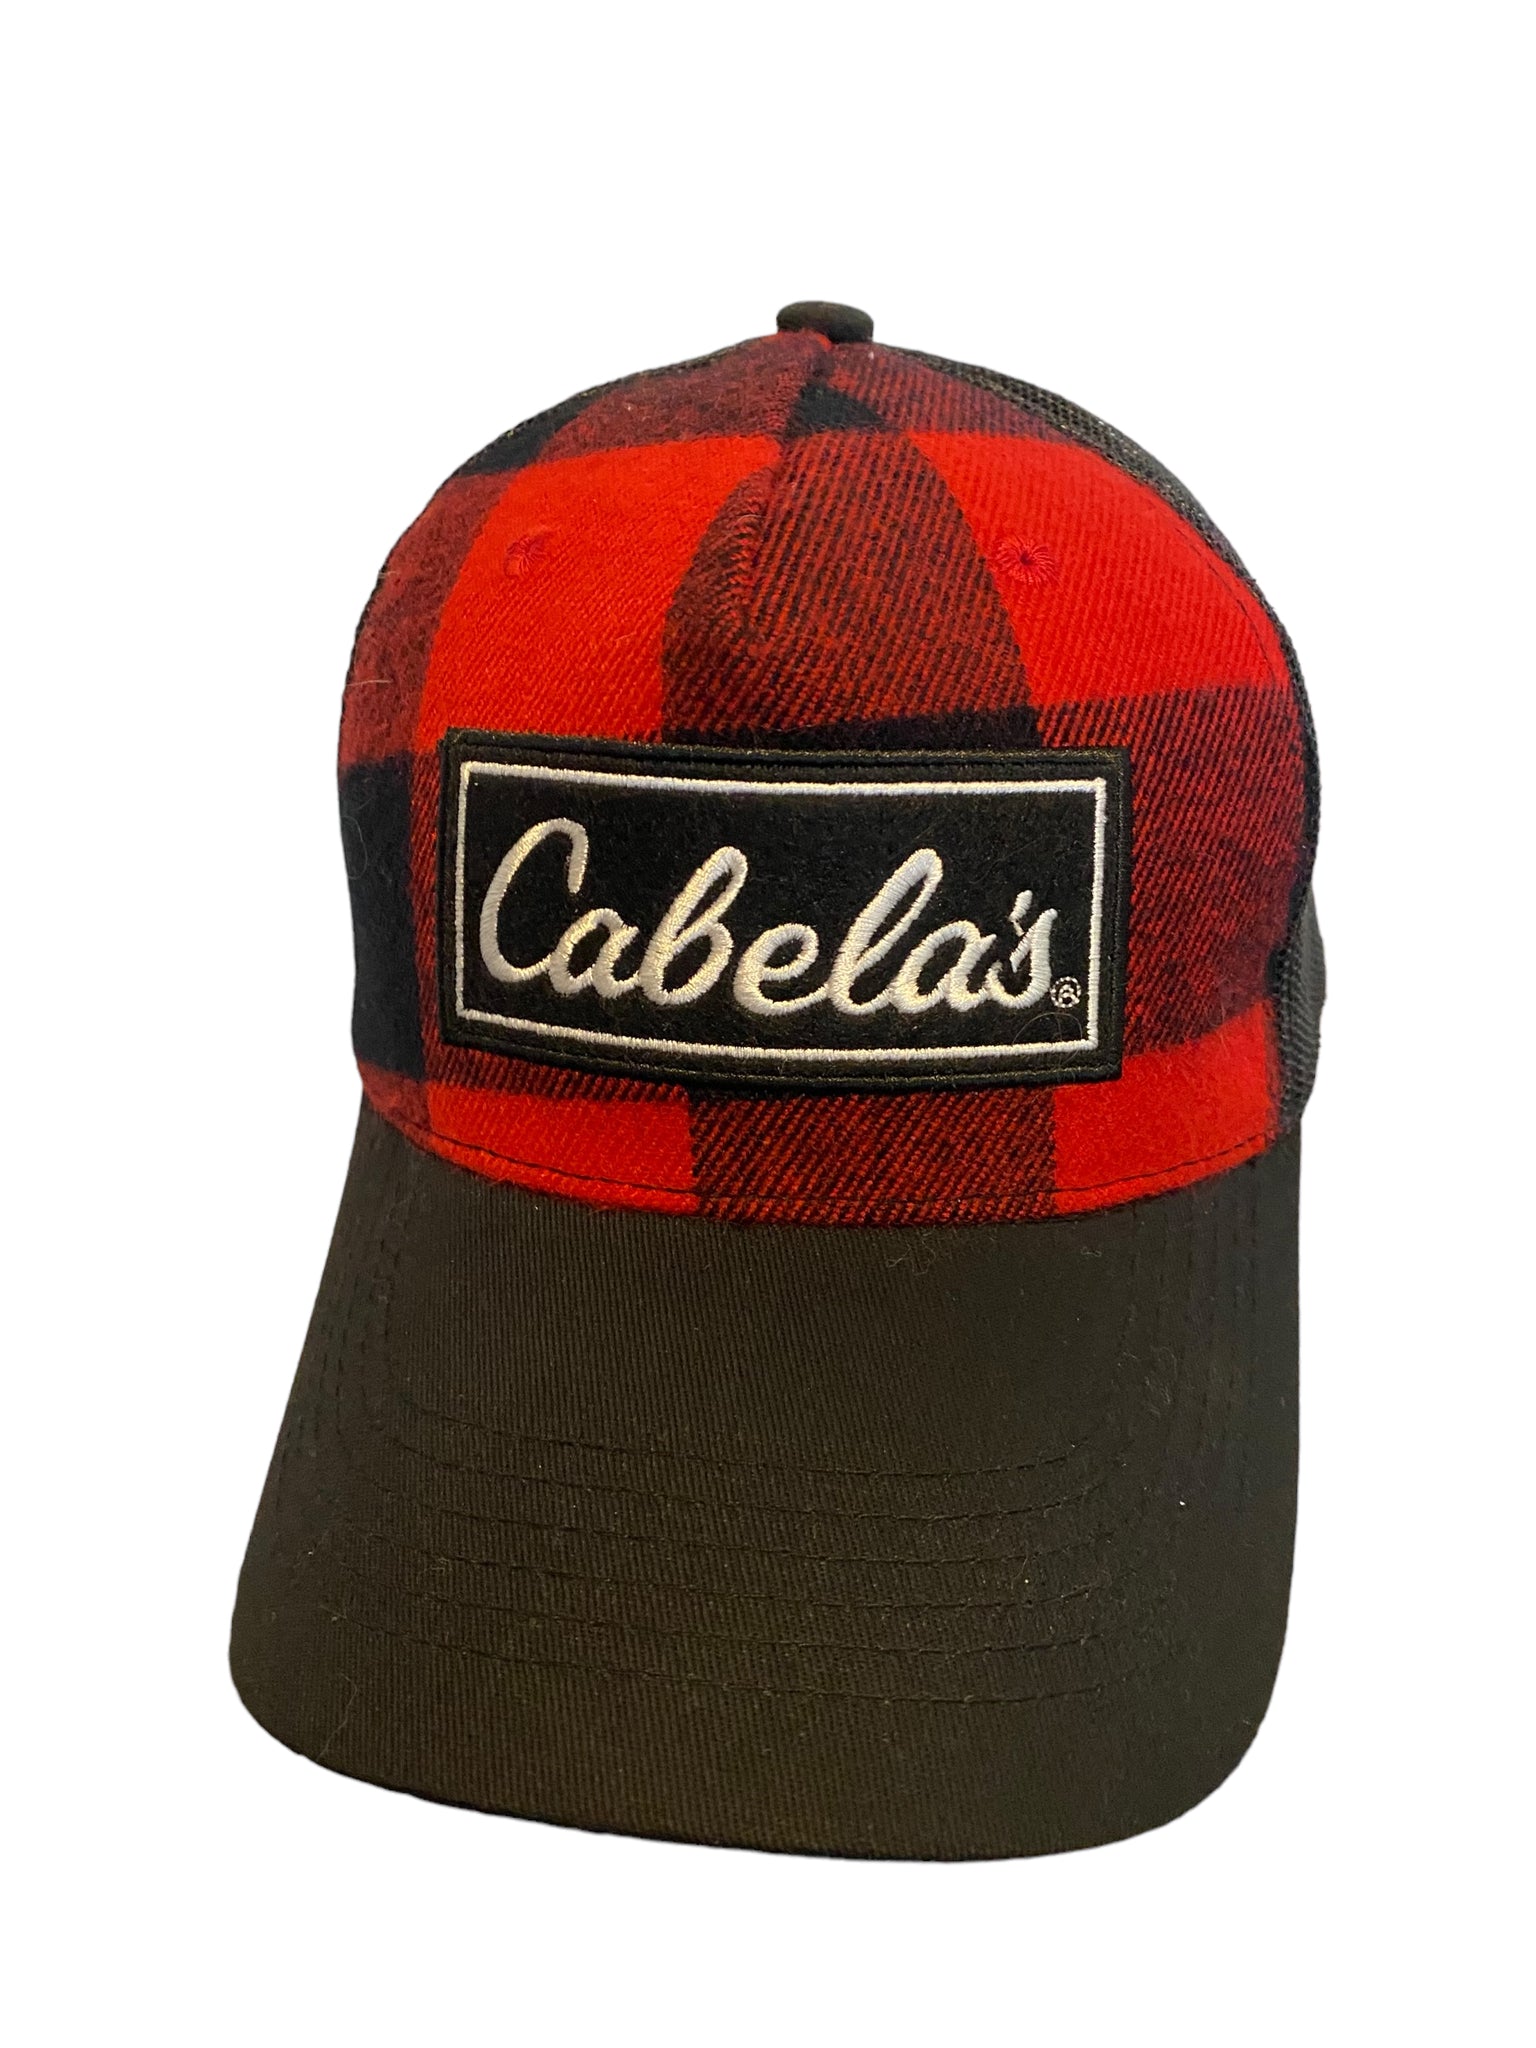 Cabelas Trucker Hat Cap Buffalo Plaid Black And Red Checker Pattern Mesh Hat